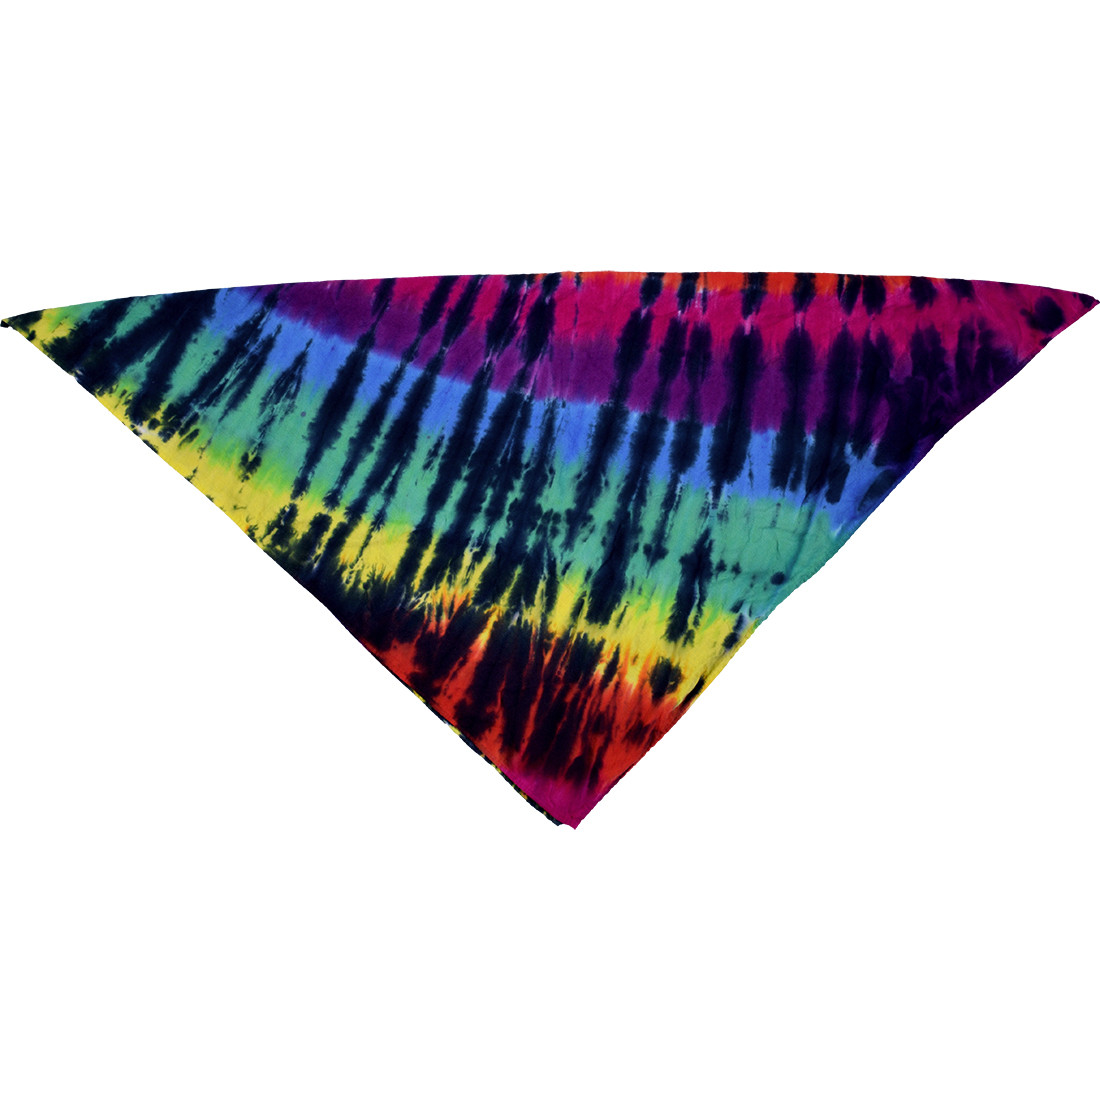 Rainbow Spiral Streak Tie-Dye Bandana